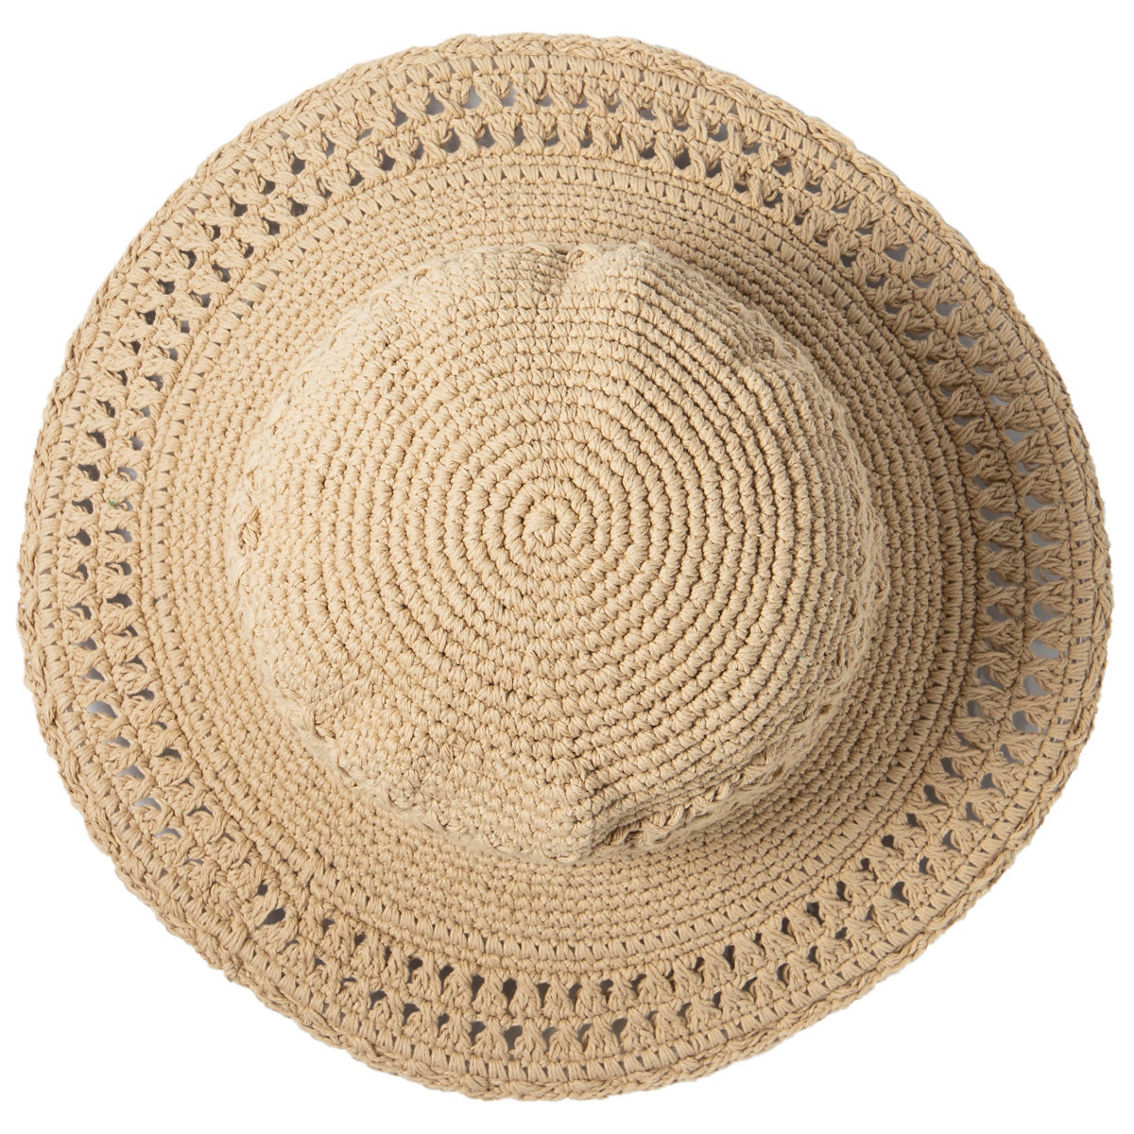 San Diego Hat Company Womens Crochet Hat - Image 4 of 4